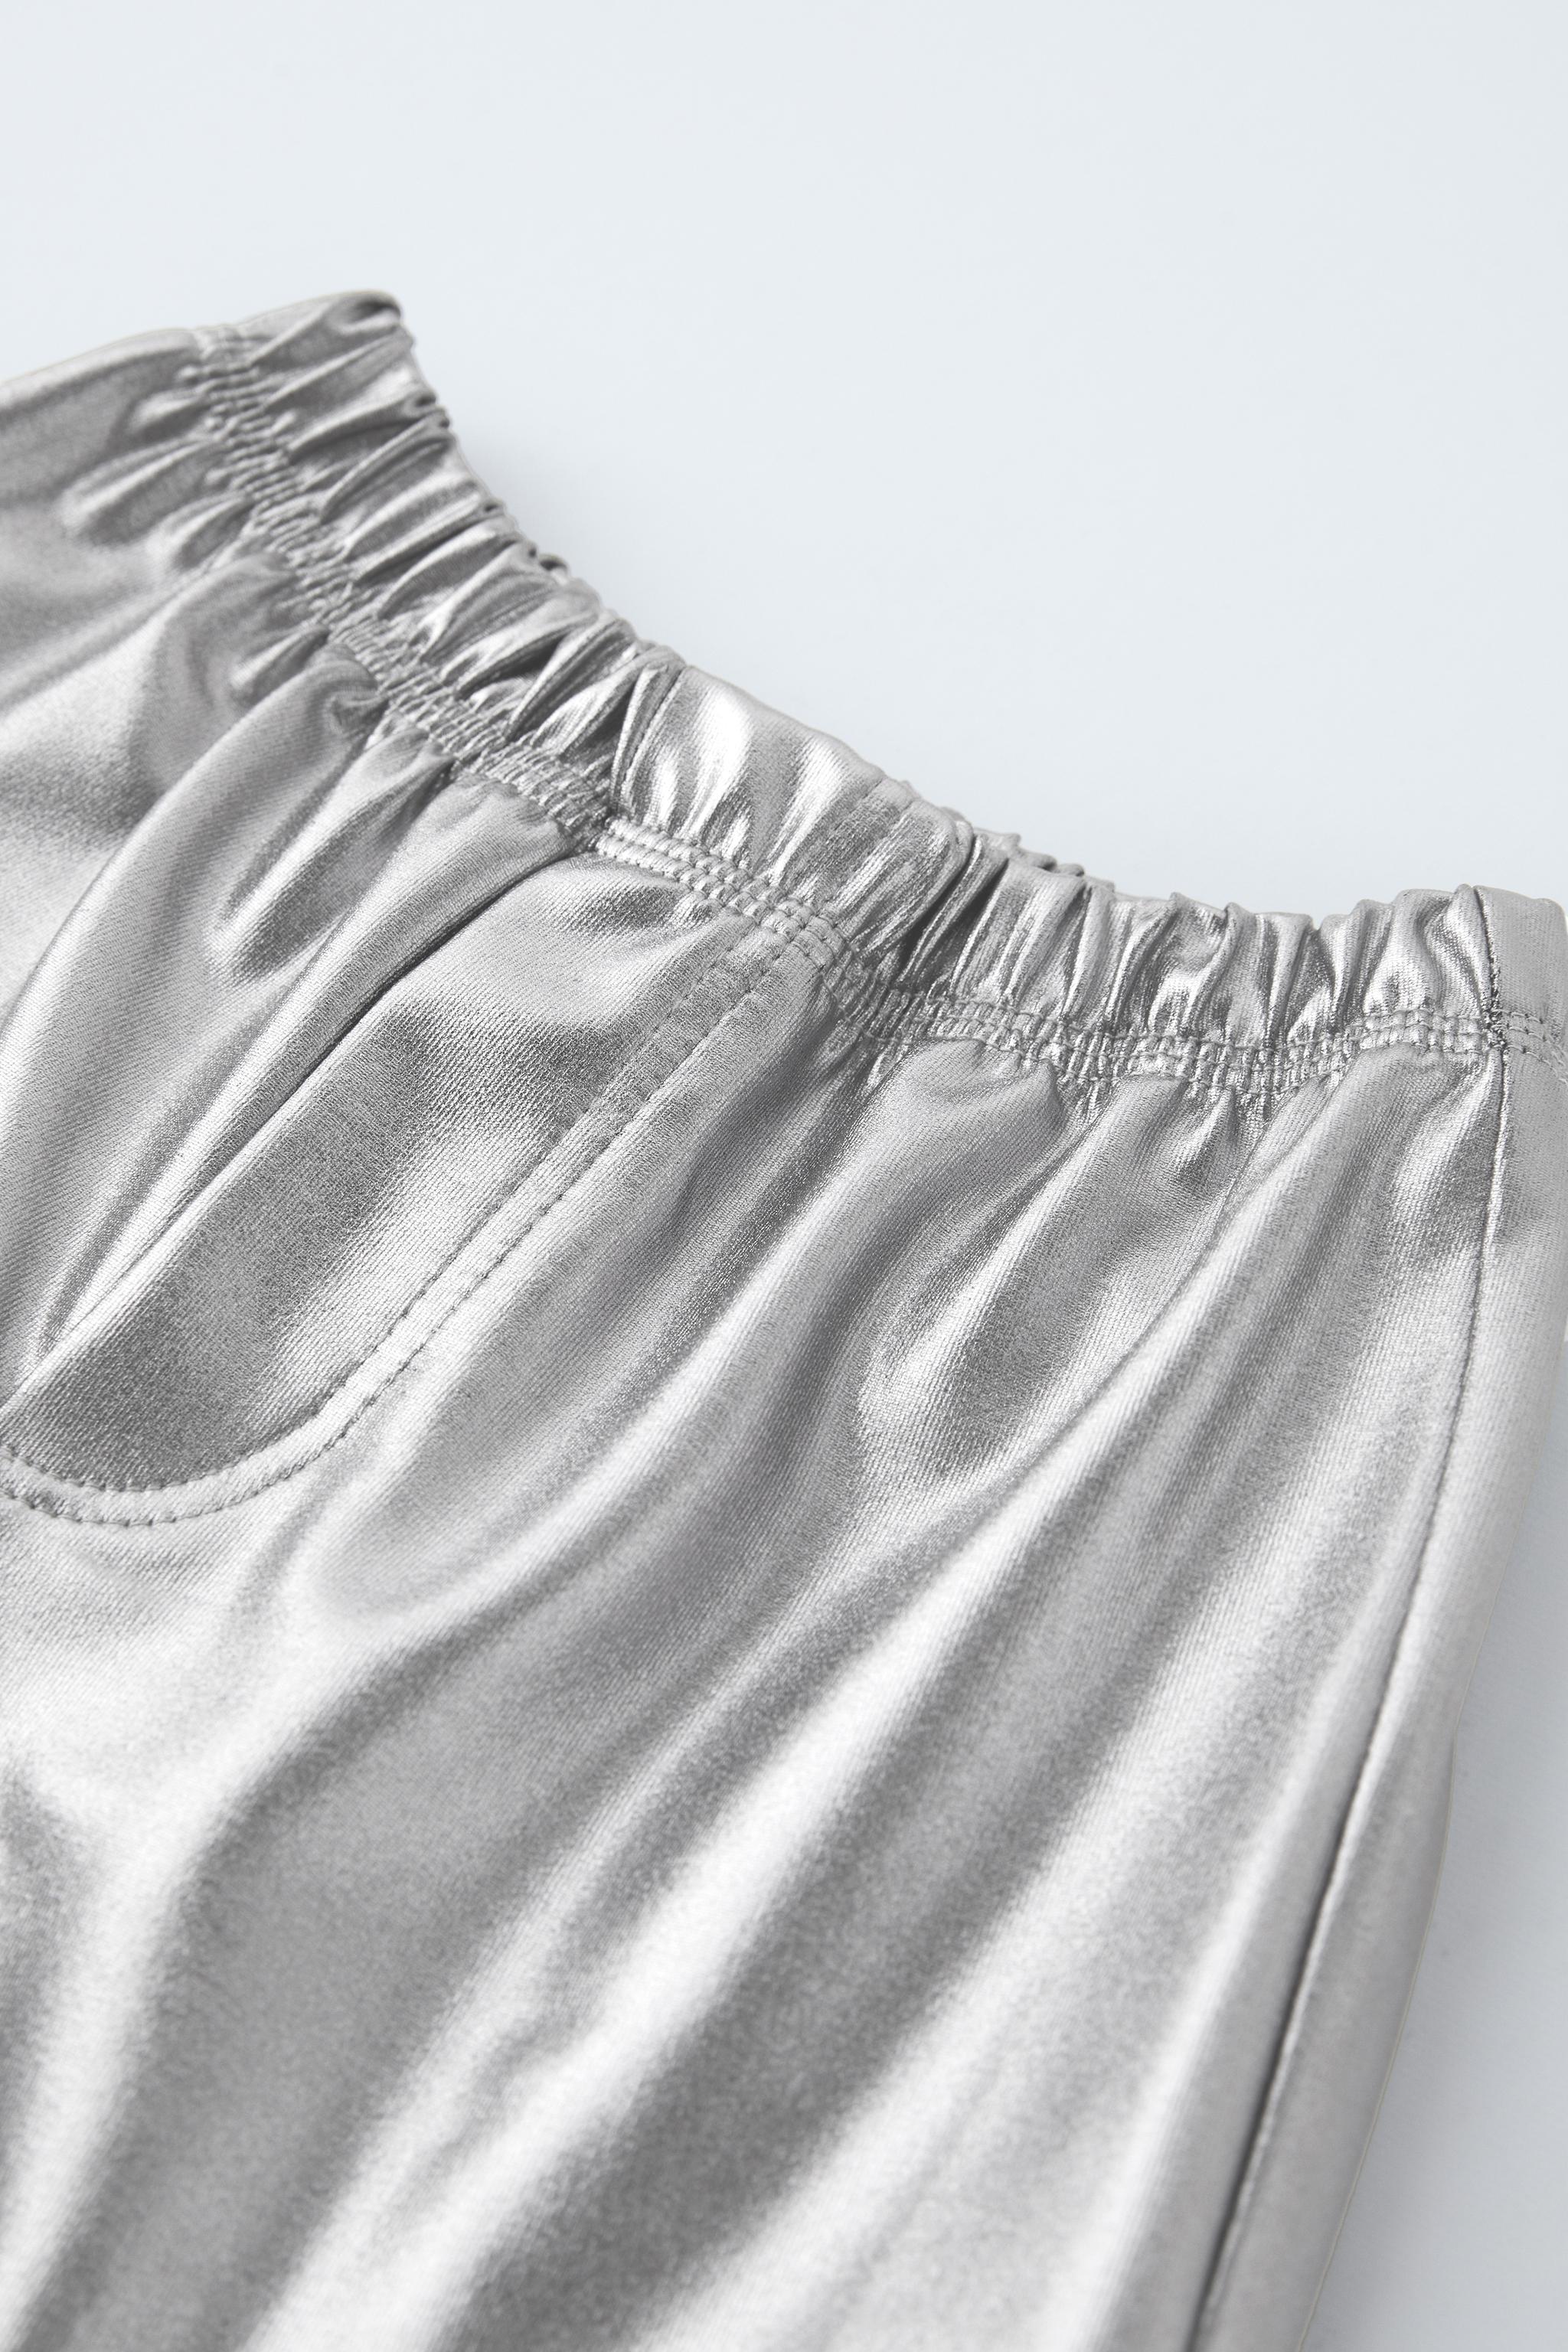 Zara silver metallic joggers - blogger favorite